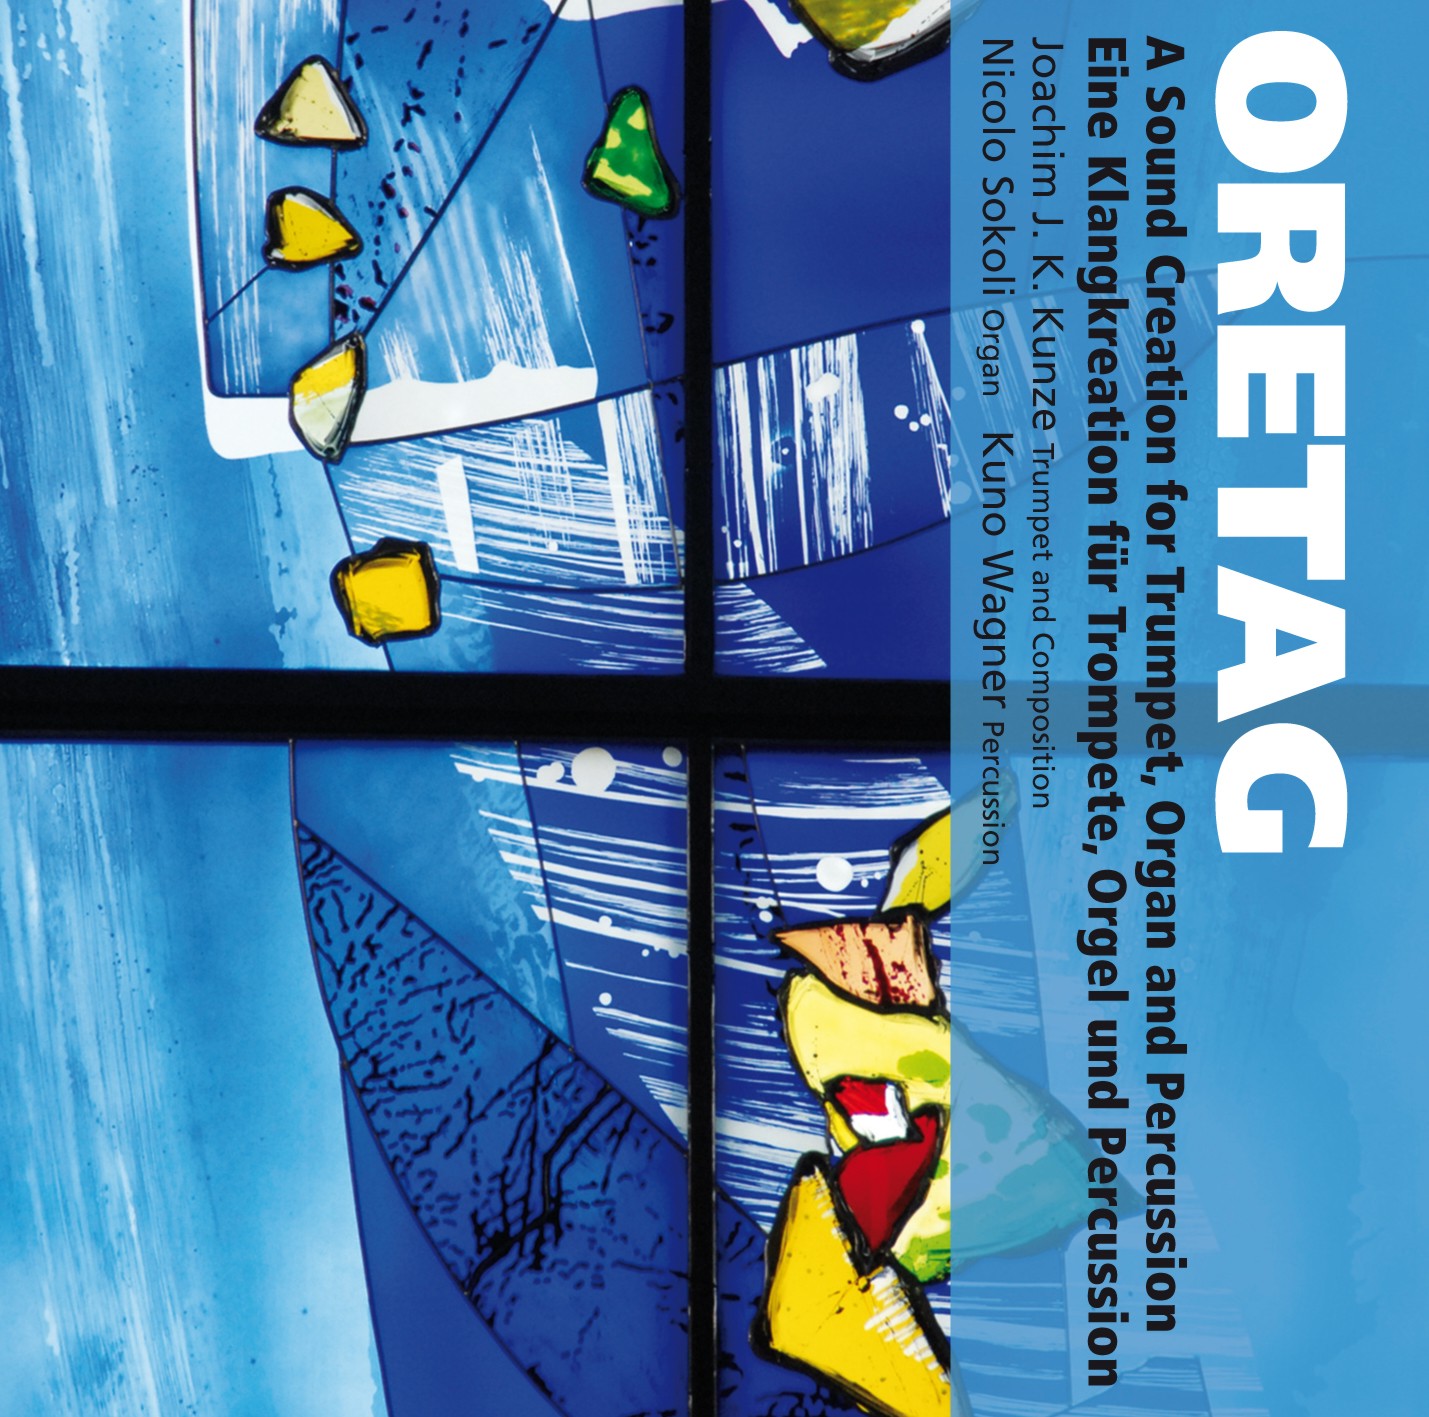 ORETAG - Eine Klangkreation von Joachim J.K. Kunze